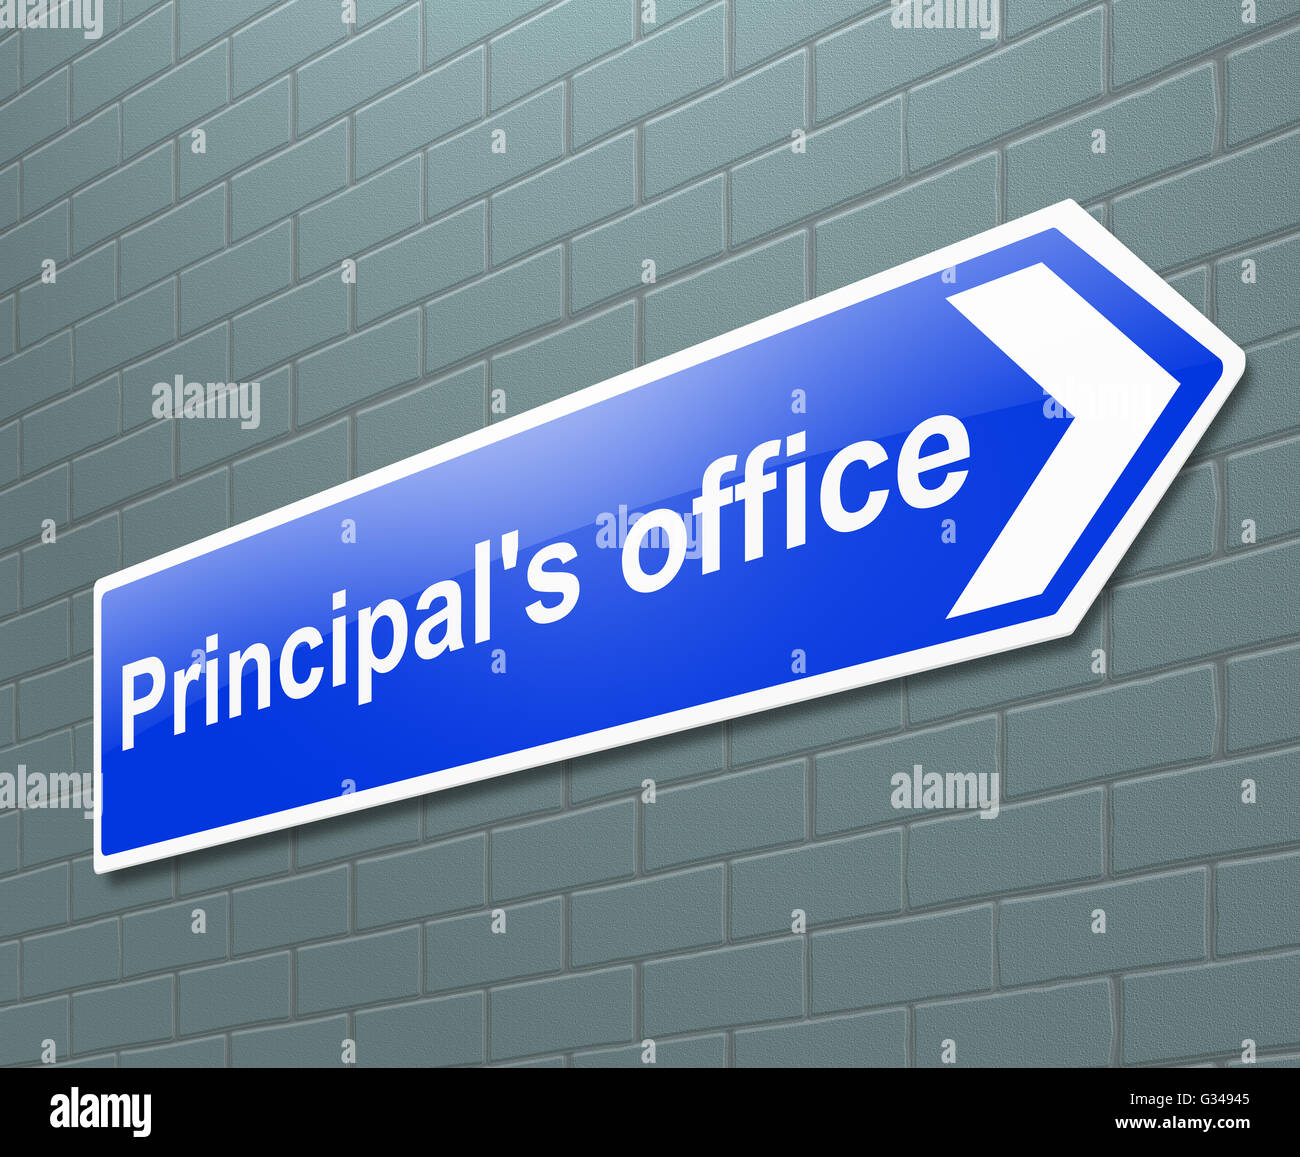 Principal's office concept. Stock Photo